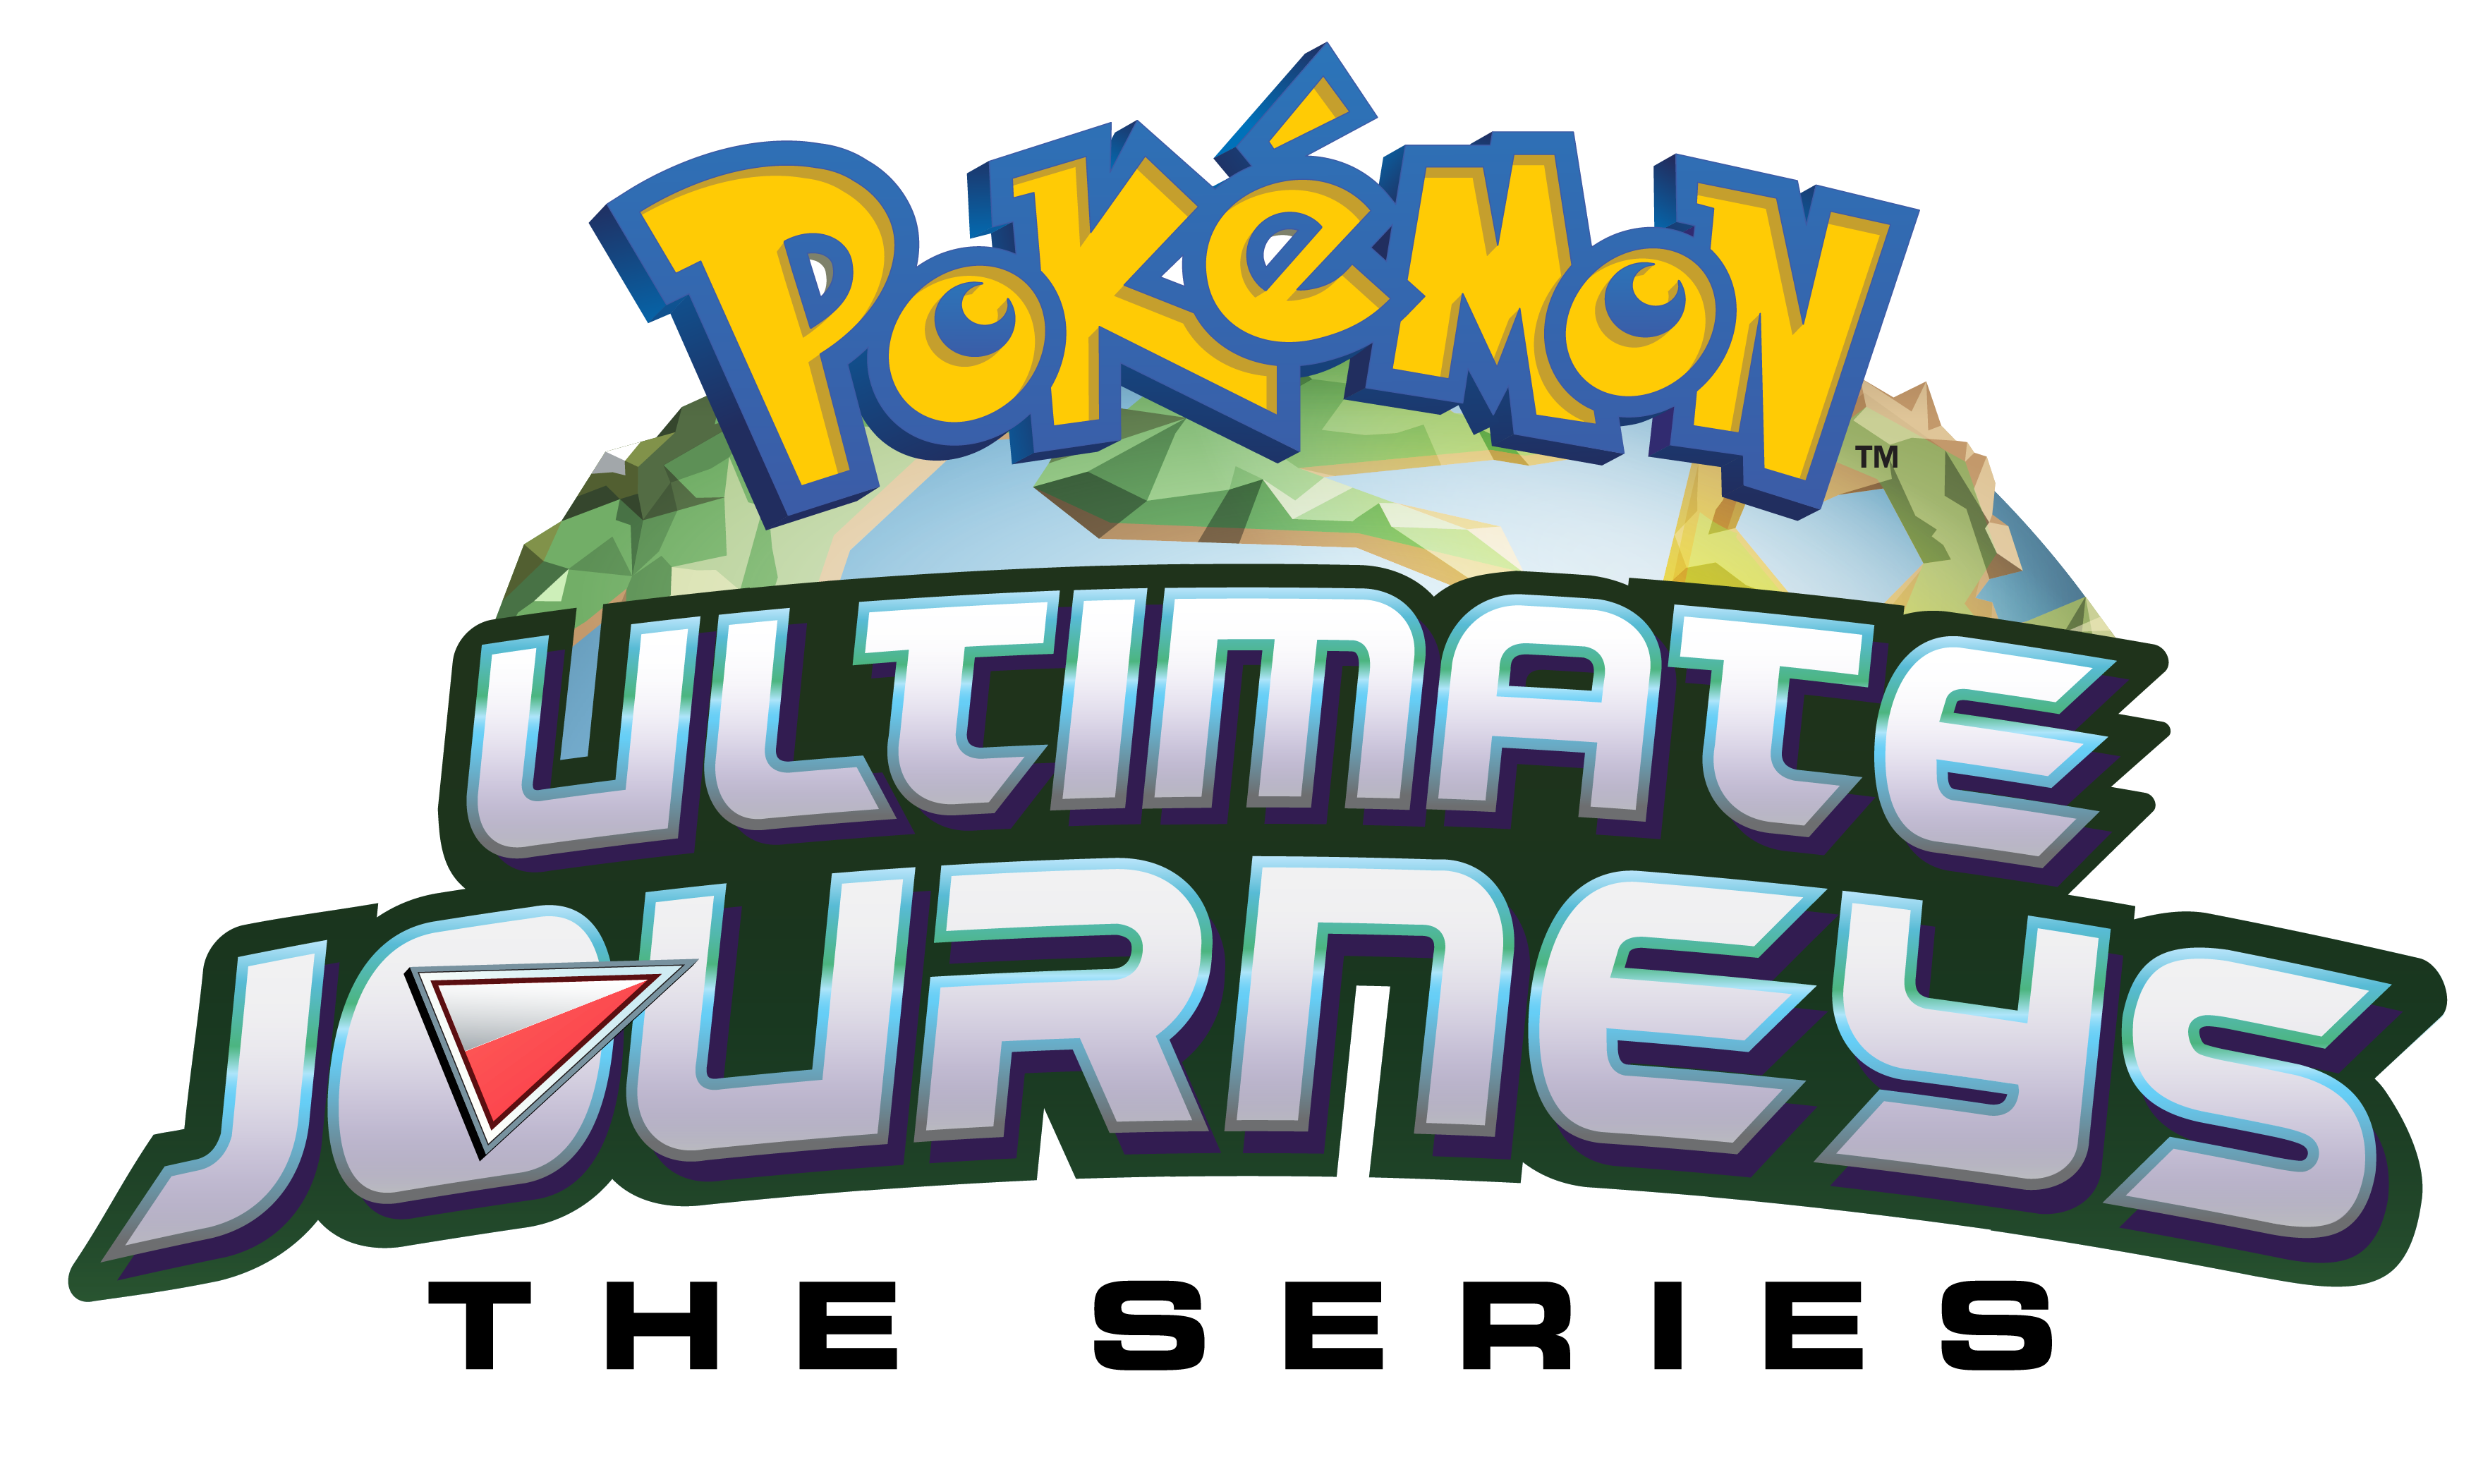 Watch Pokémon Journeys: The Series Episode 1 Now on Pokémon TV and